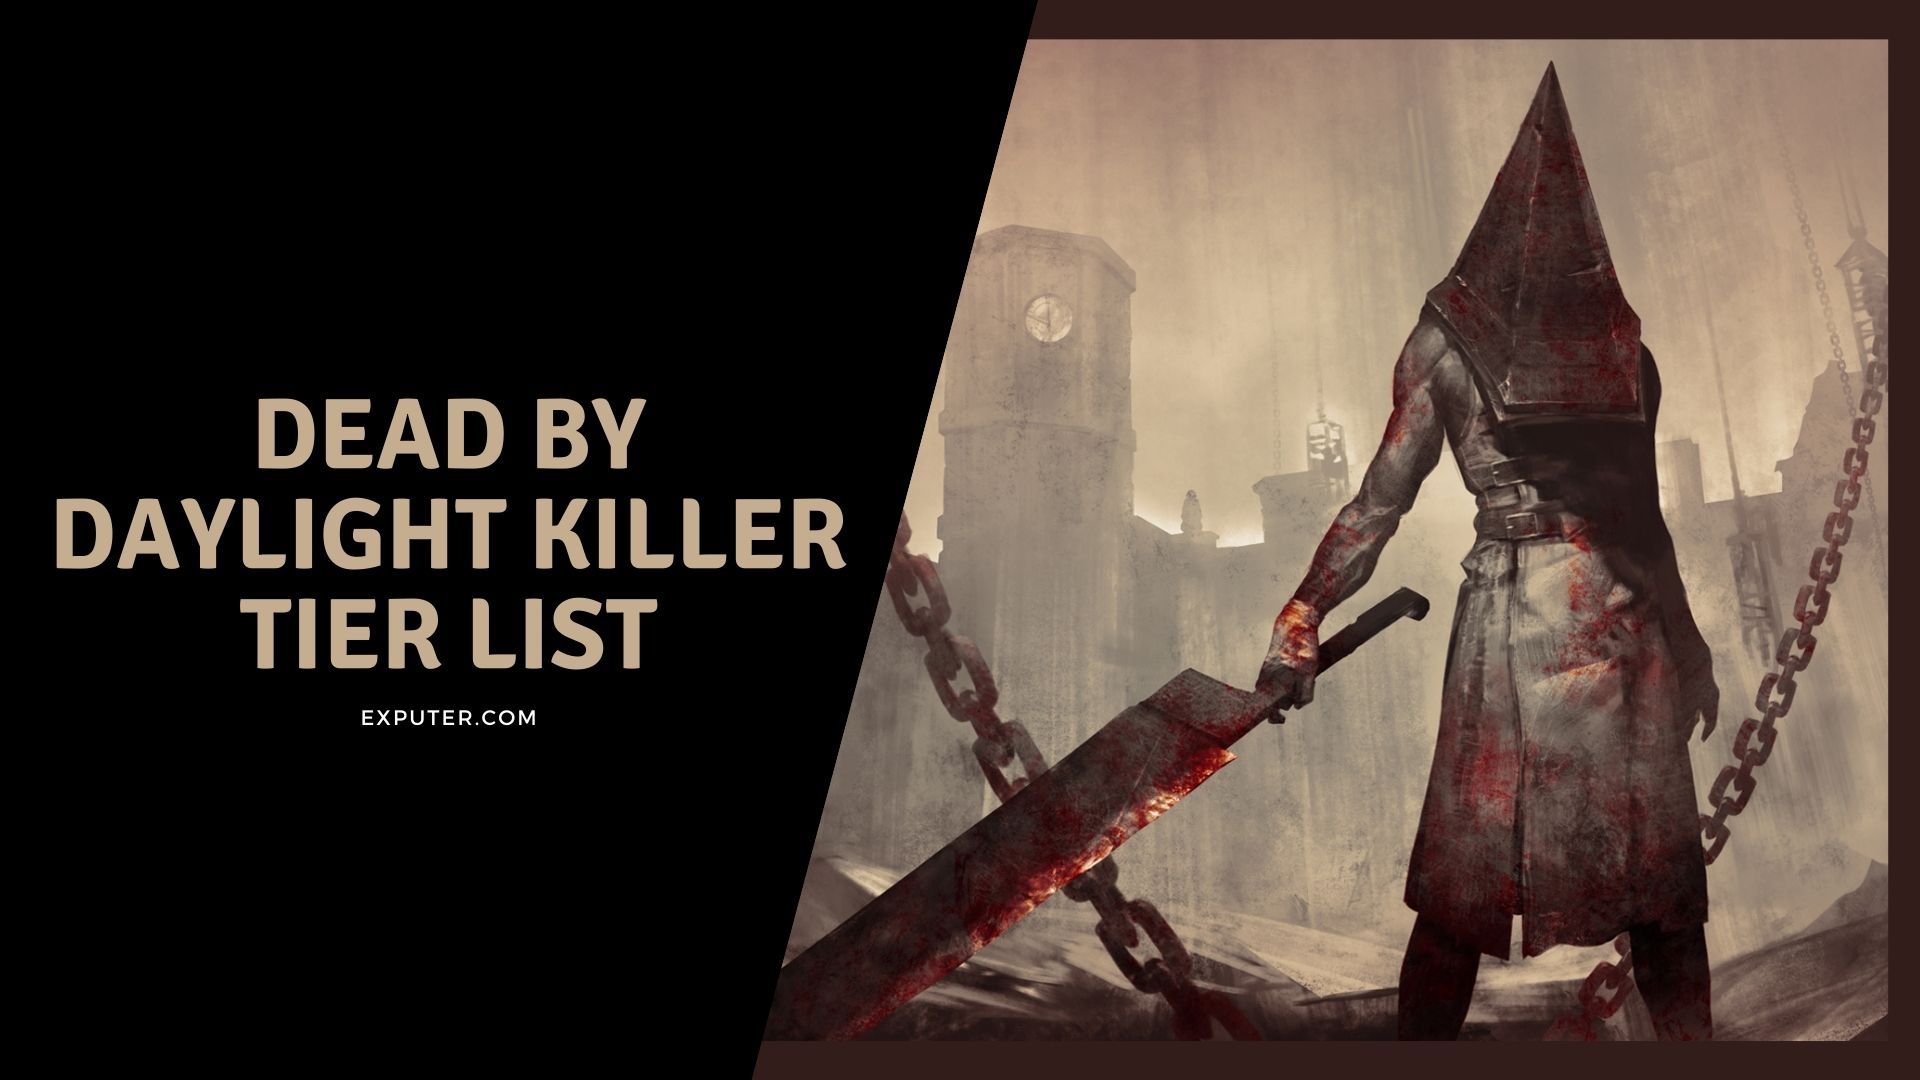 All dbd blighted killer skins ranked by opinion! : r/deadbydaylight